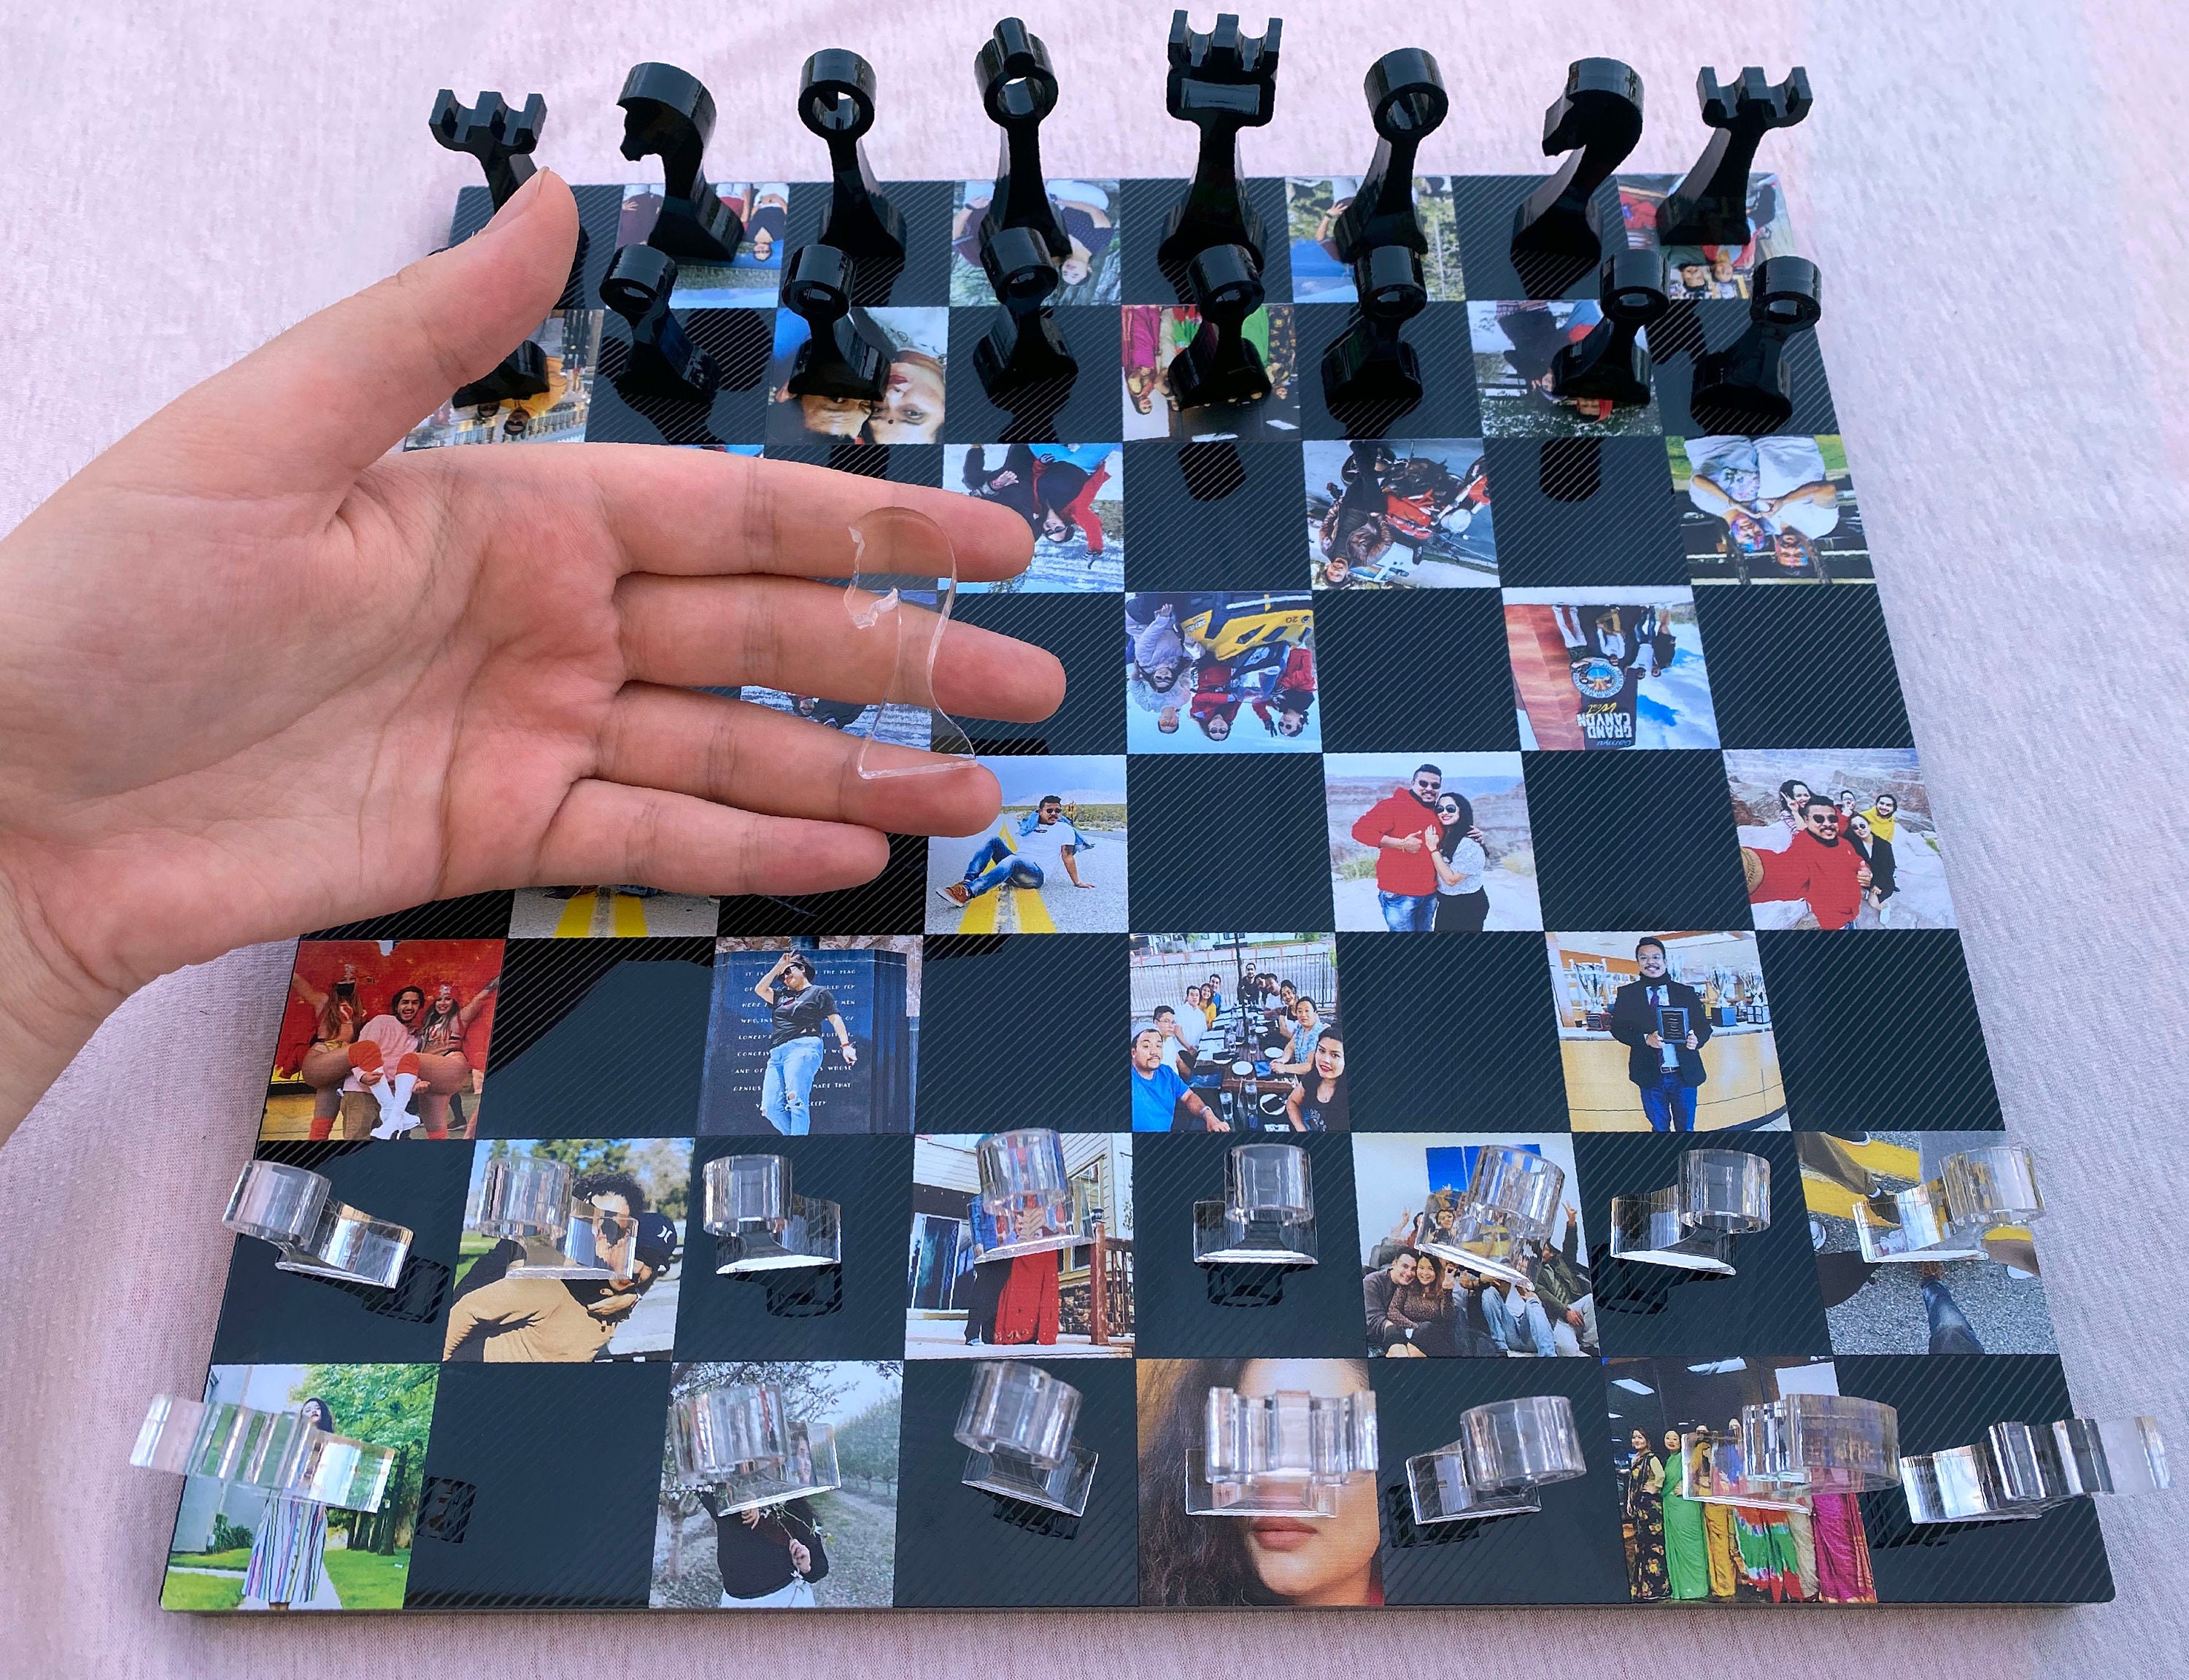 Chess set my folks got me for Christmas - looks familiar! 🙂 : r/aoe2